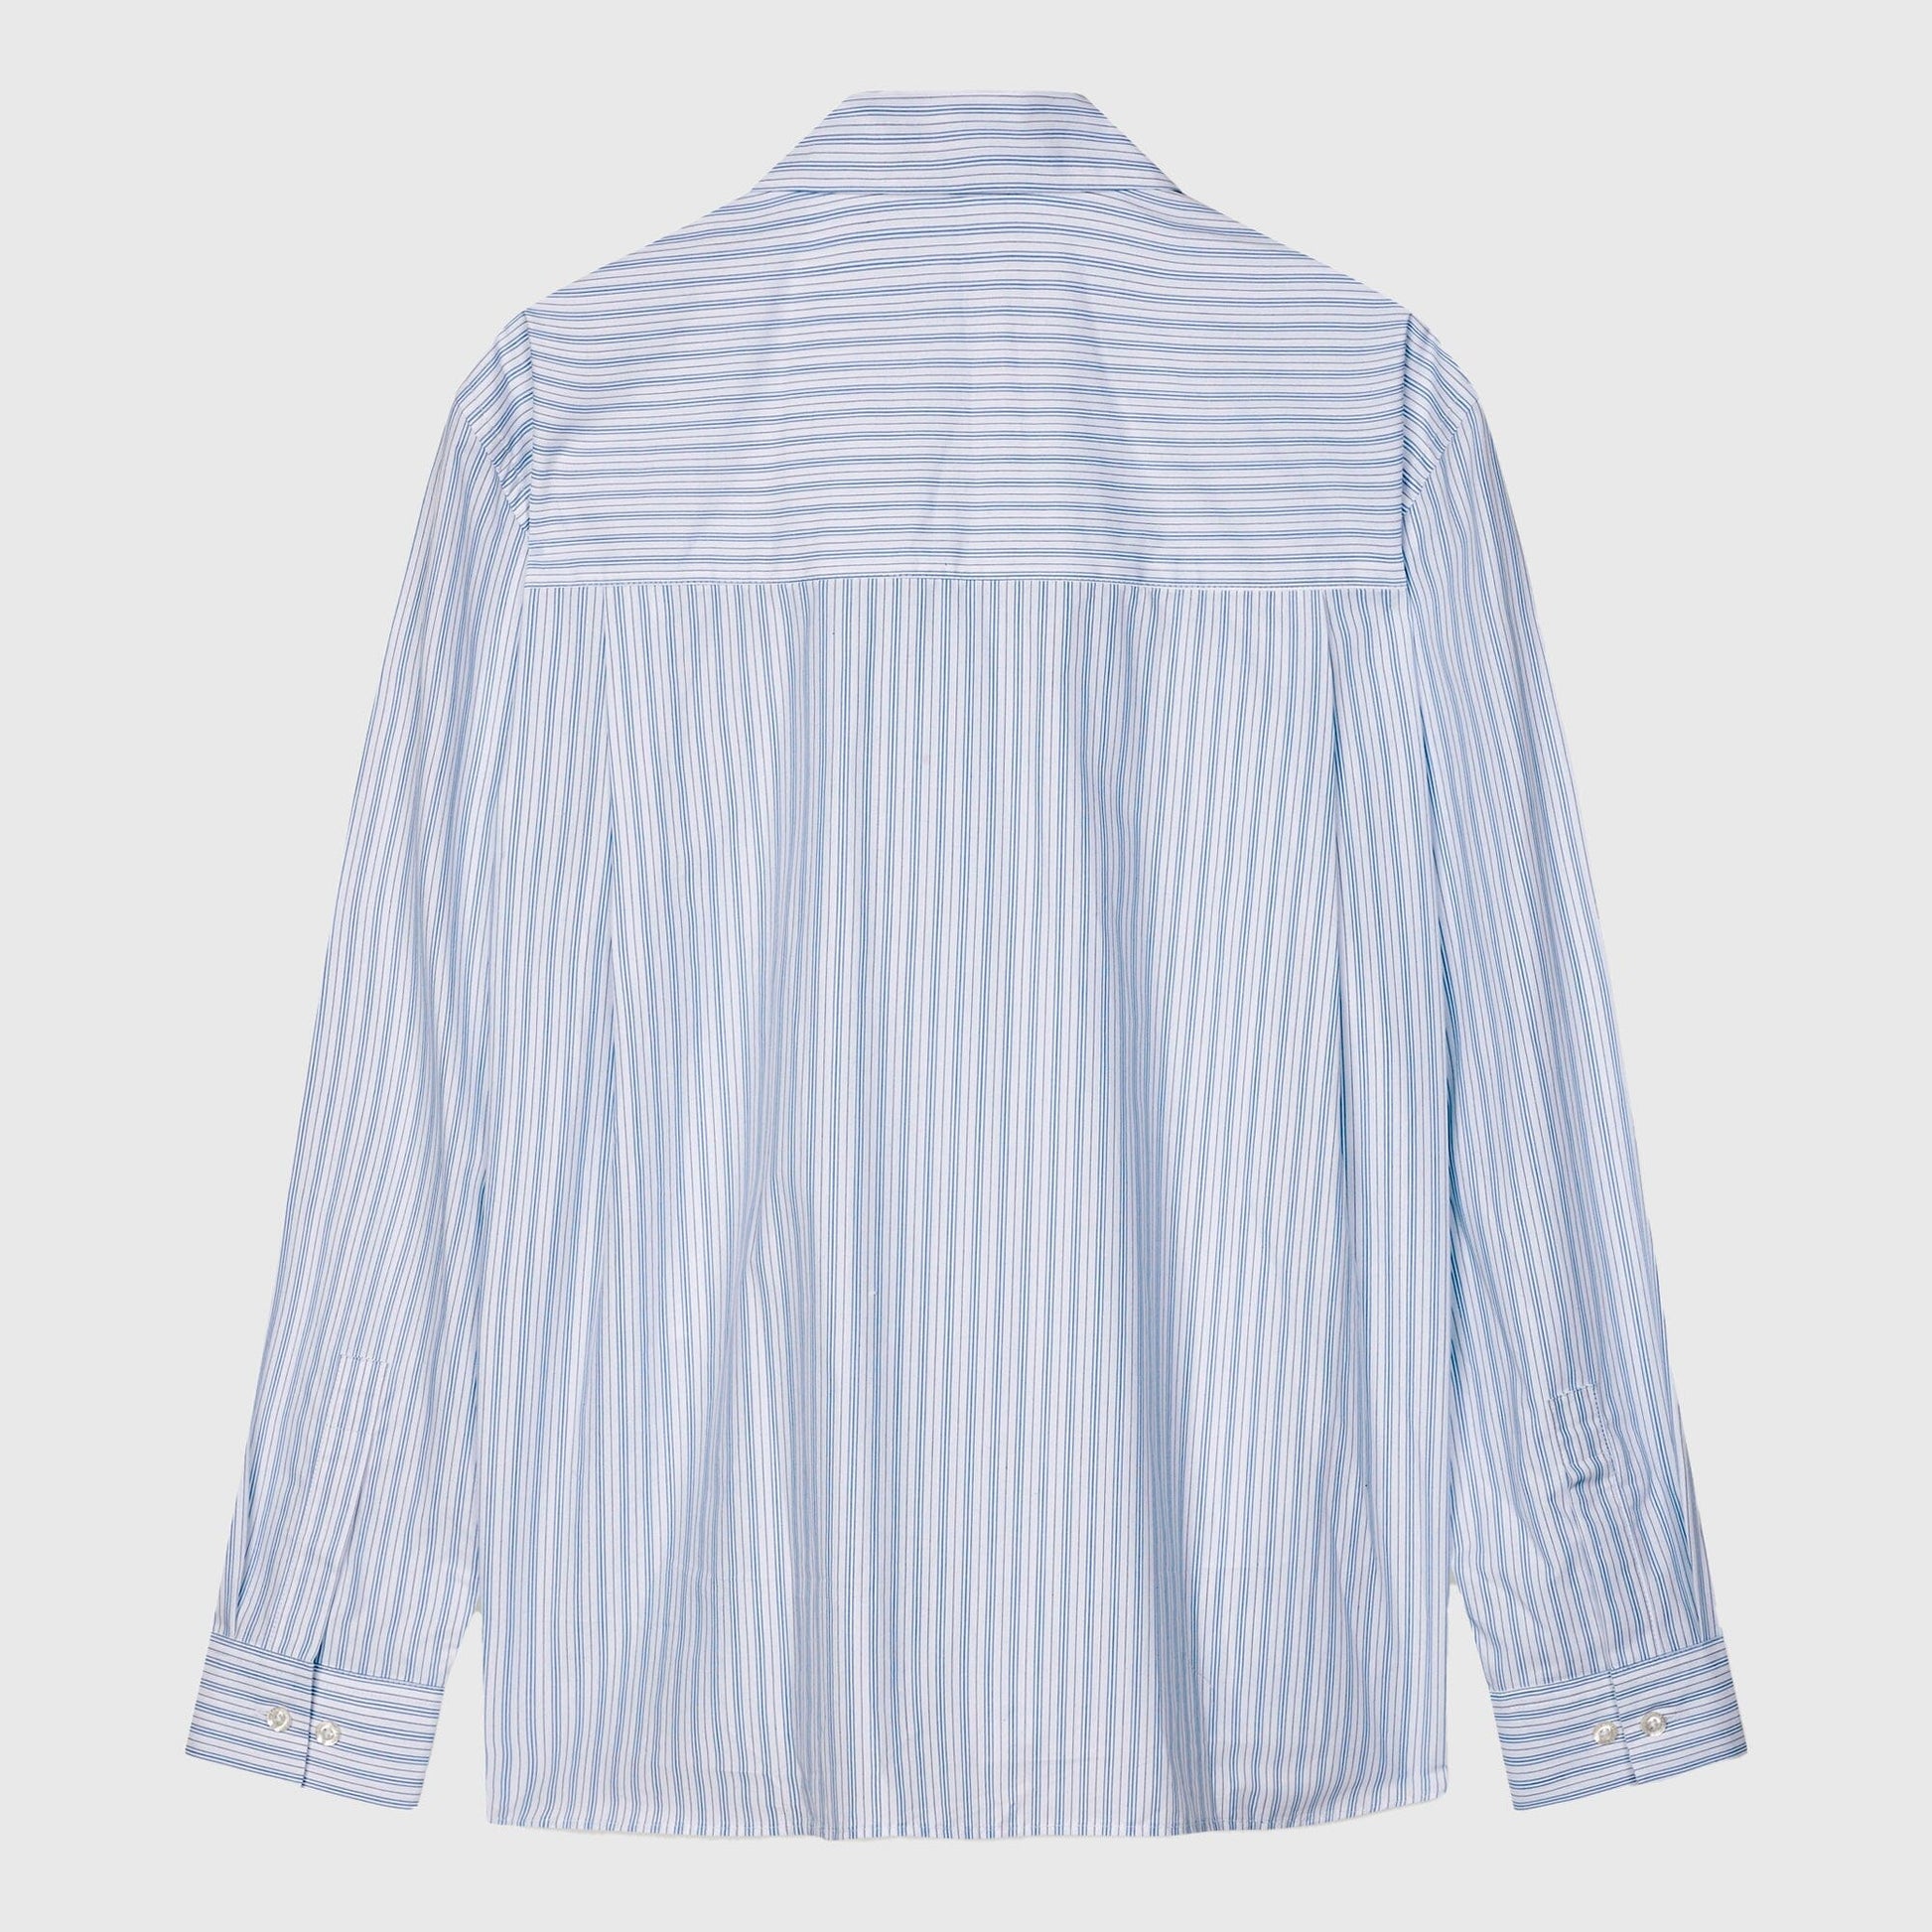 Libertine-Libertine Domain Shirt - Light Blue Stripe Shirt Libertine-Libertine 